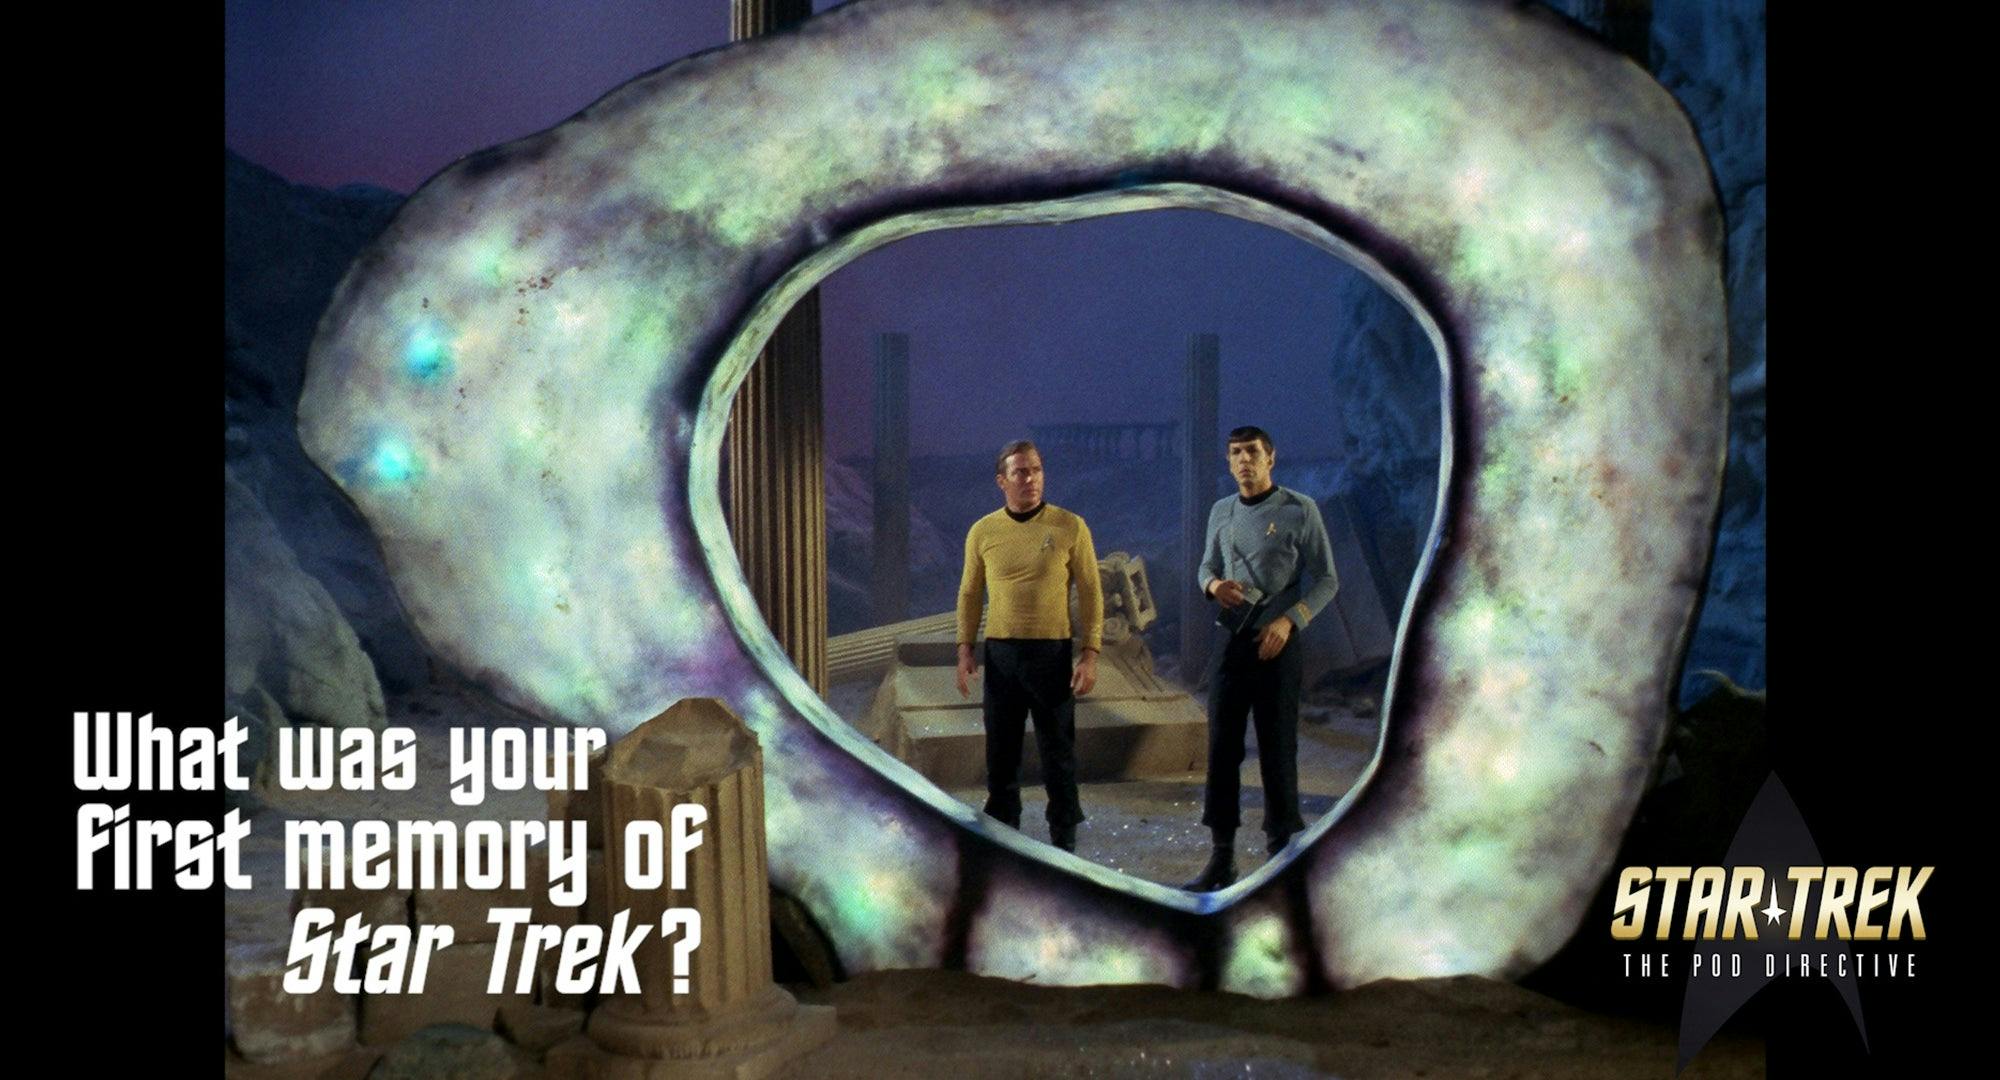 Star Trek: The Original Series - "The City on the Edge of Forever"